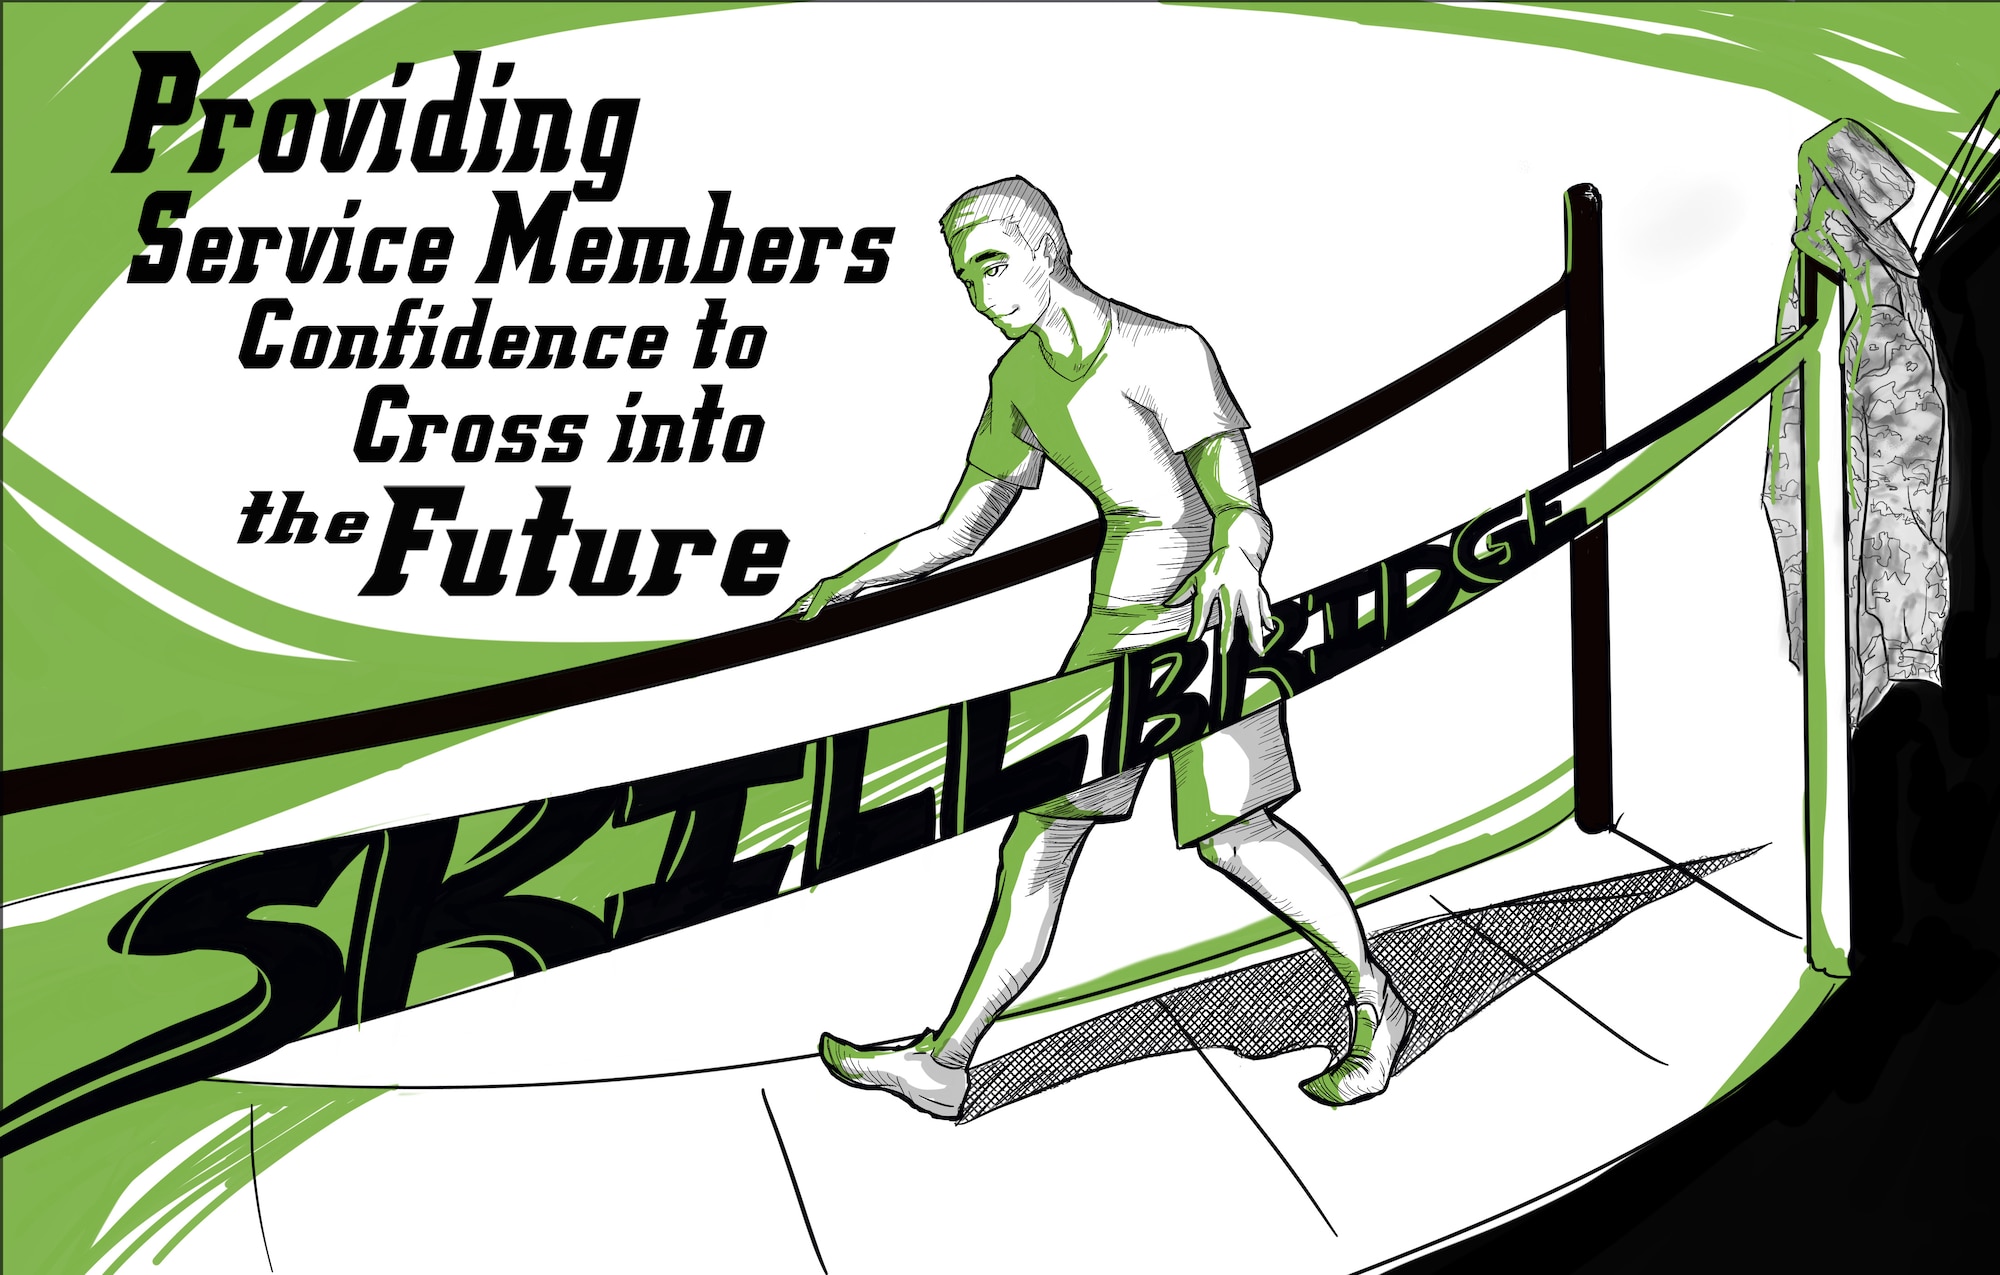 Graphic show a person crossing a bridge and states "Skillbridge: Providing service members confidence to cross into the future."